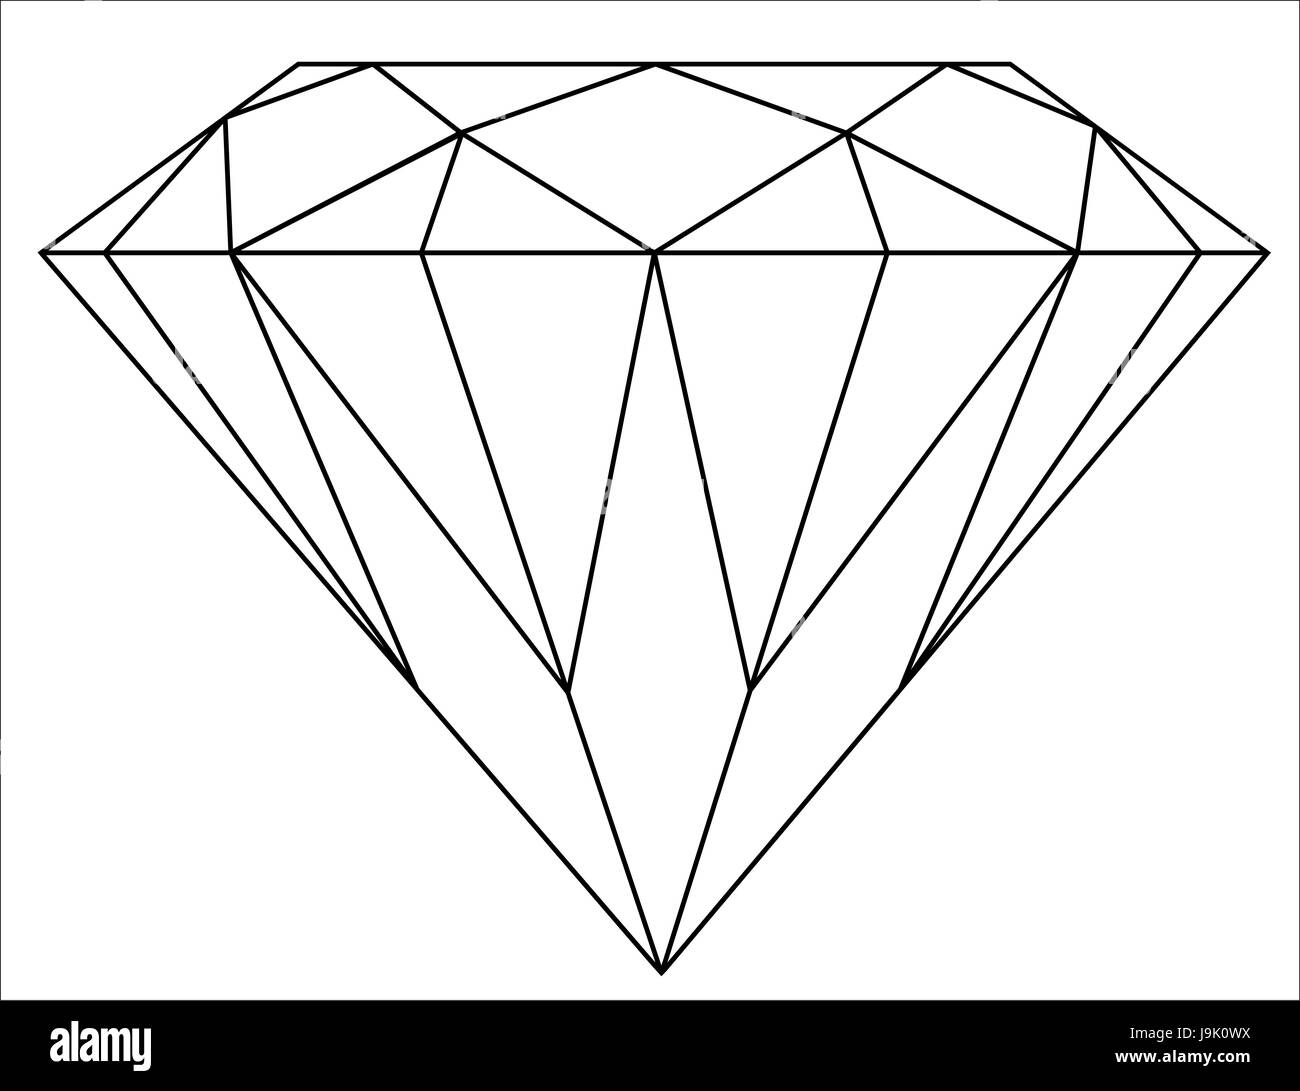 Diamond clip art Black and White Stock Photos & Images - Alamy